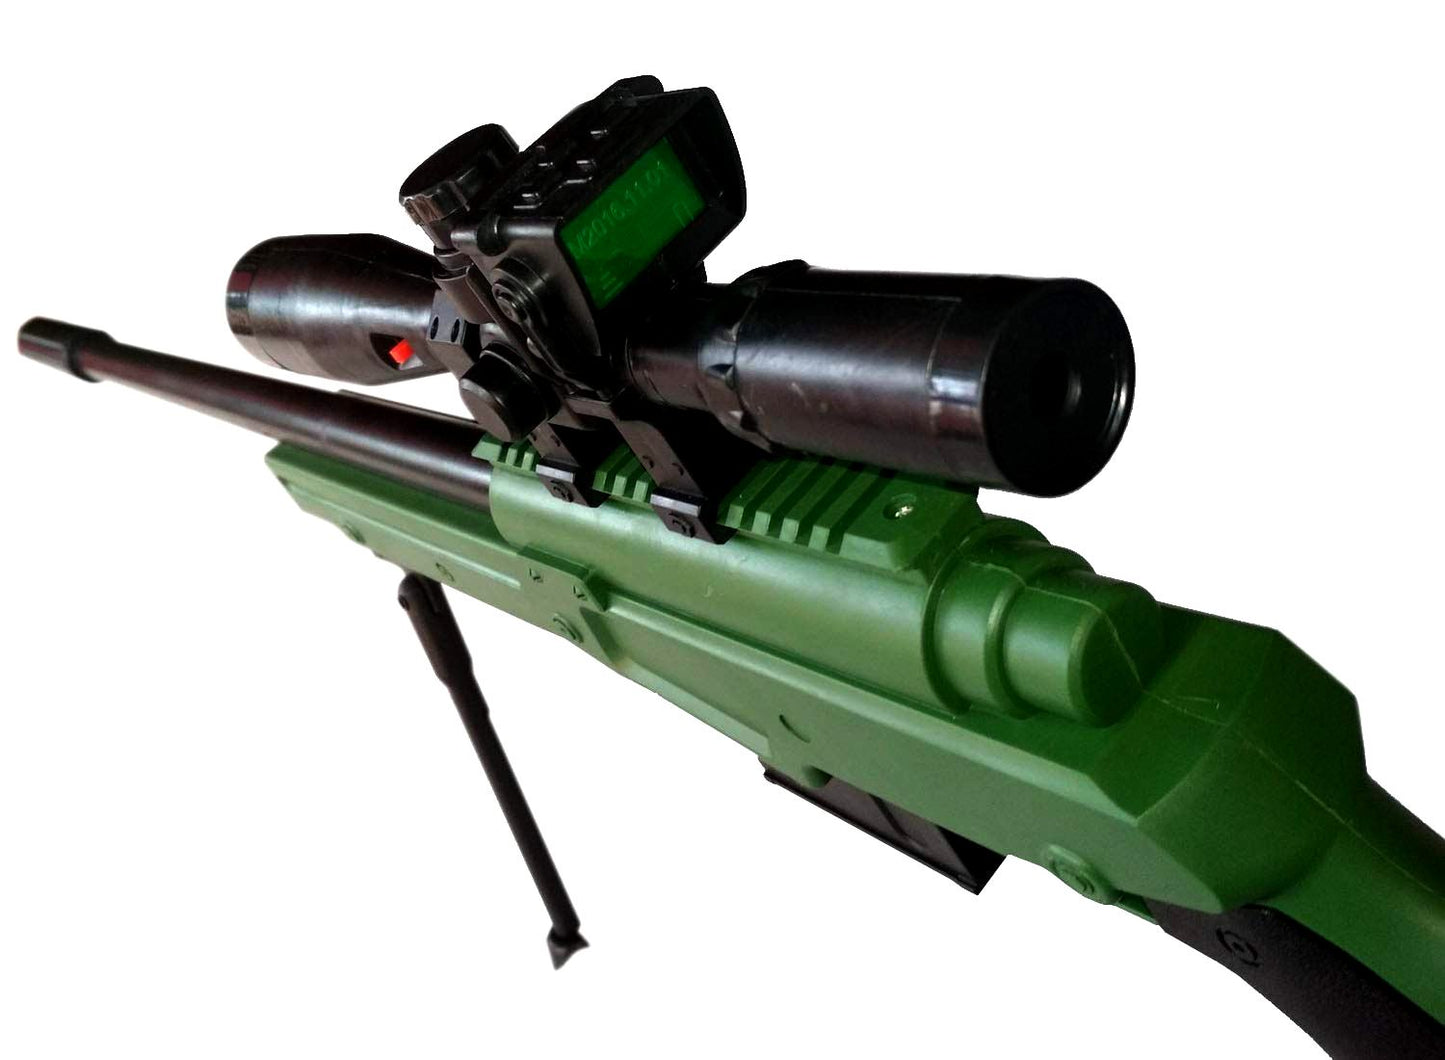 AWM 40" Inches PUBG Sniper Toy Gun with Laser Target Big Size Army Toy Gun Guns & Darts  (Green, Black)